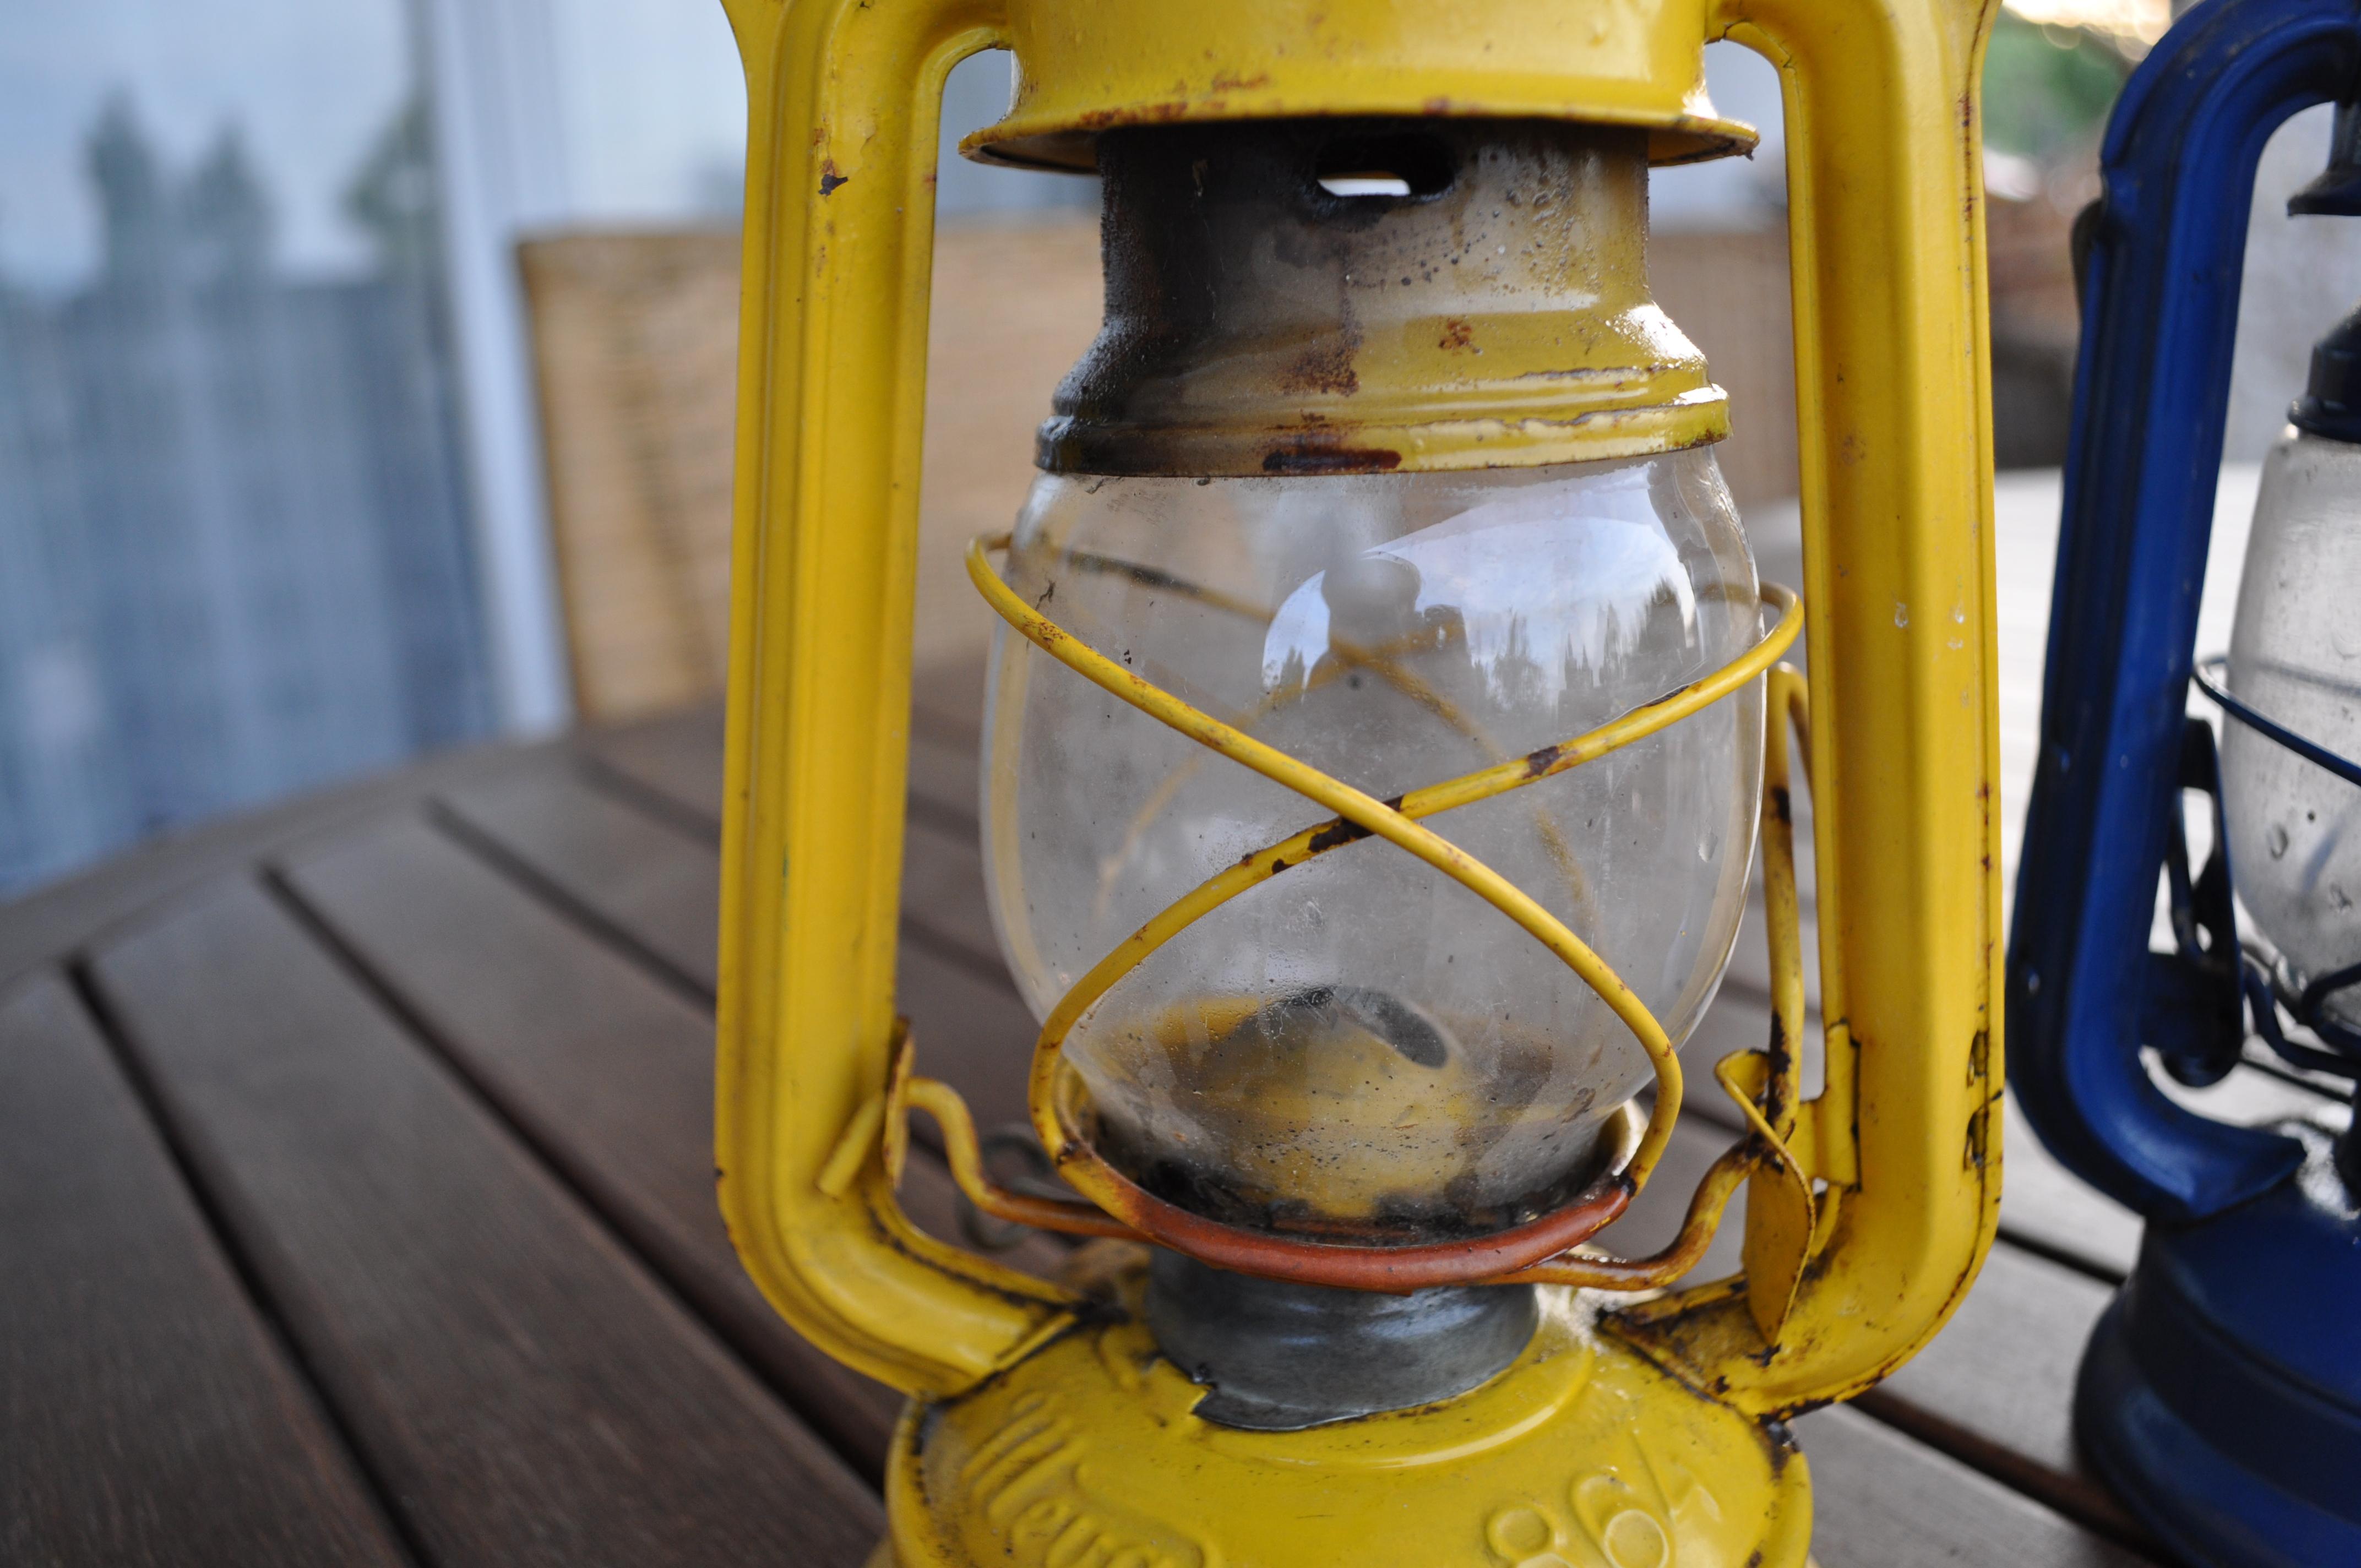 vintage oil lantern